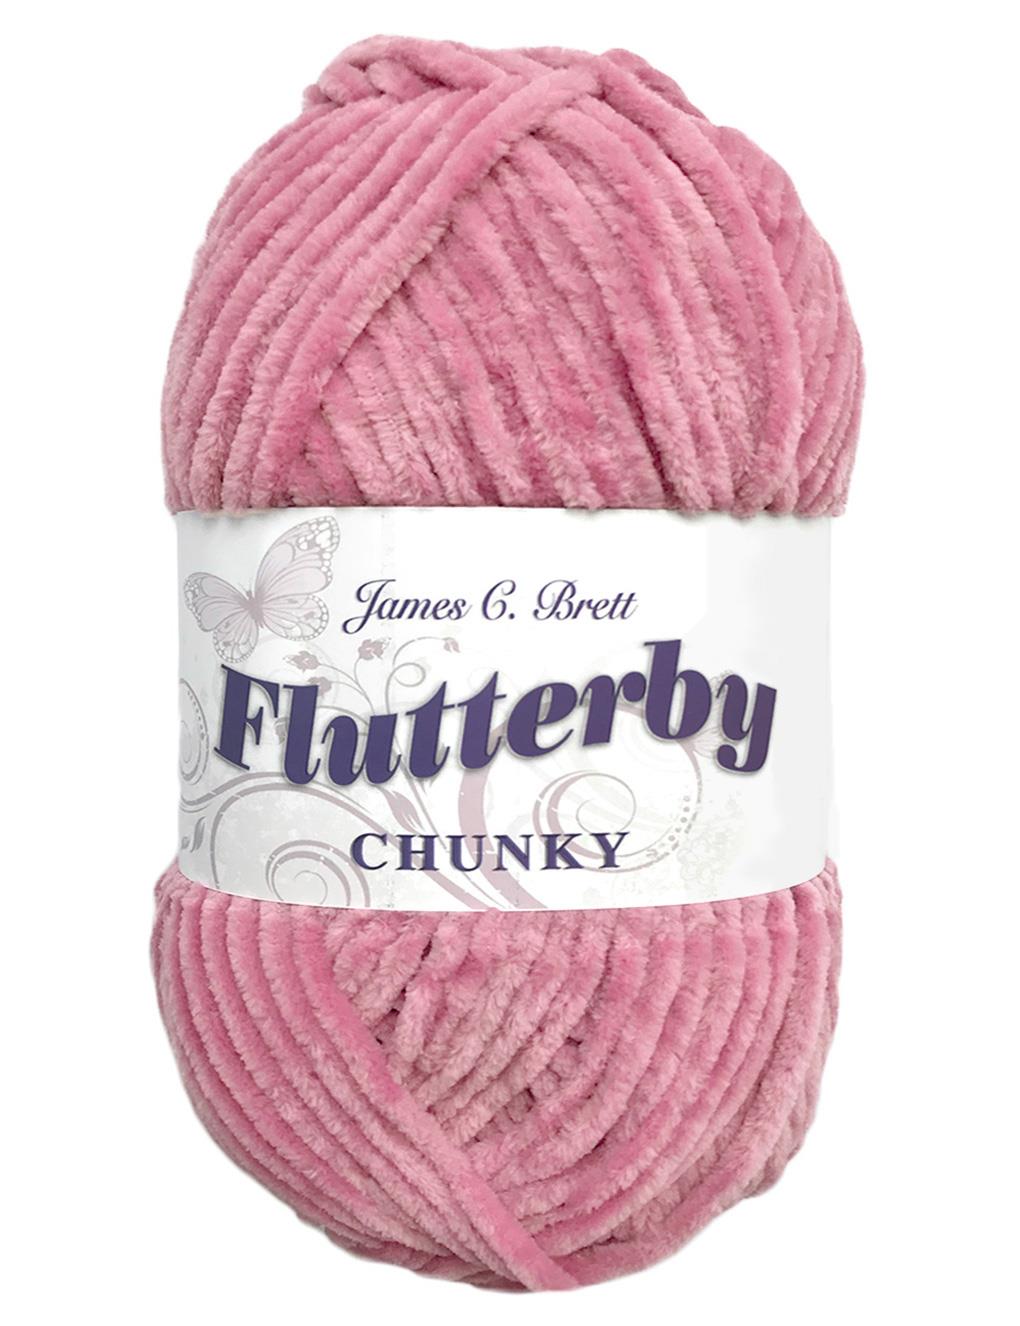 James C Brett Flutterby Chunky (B19) chenille yarn - 100g